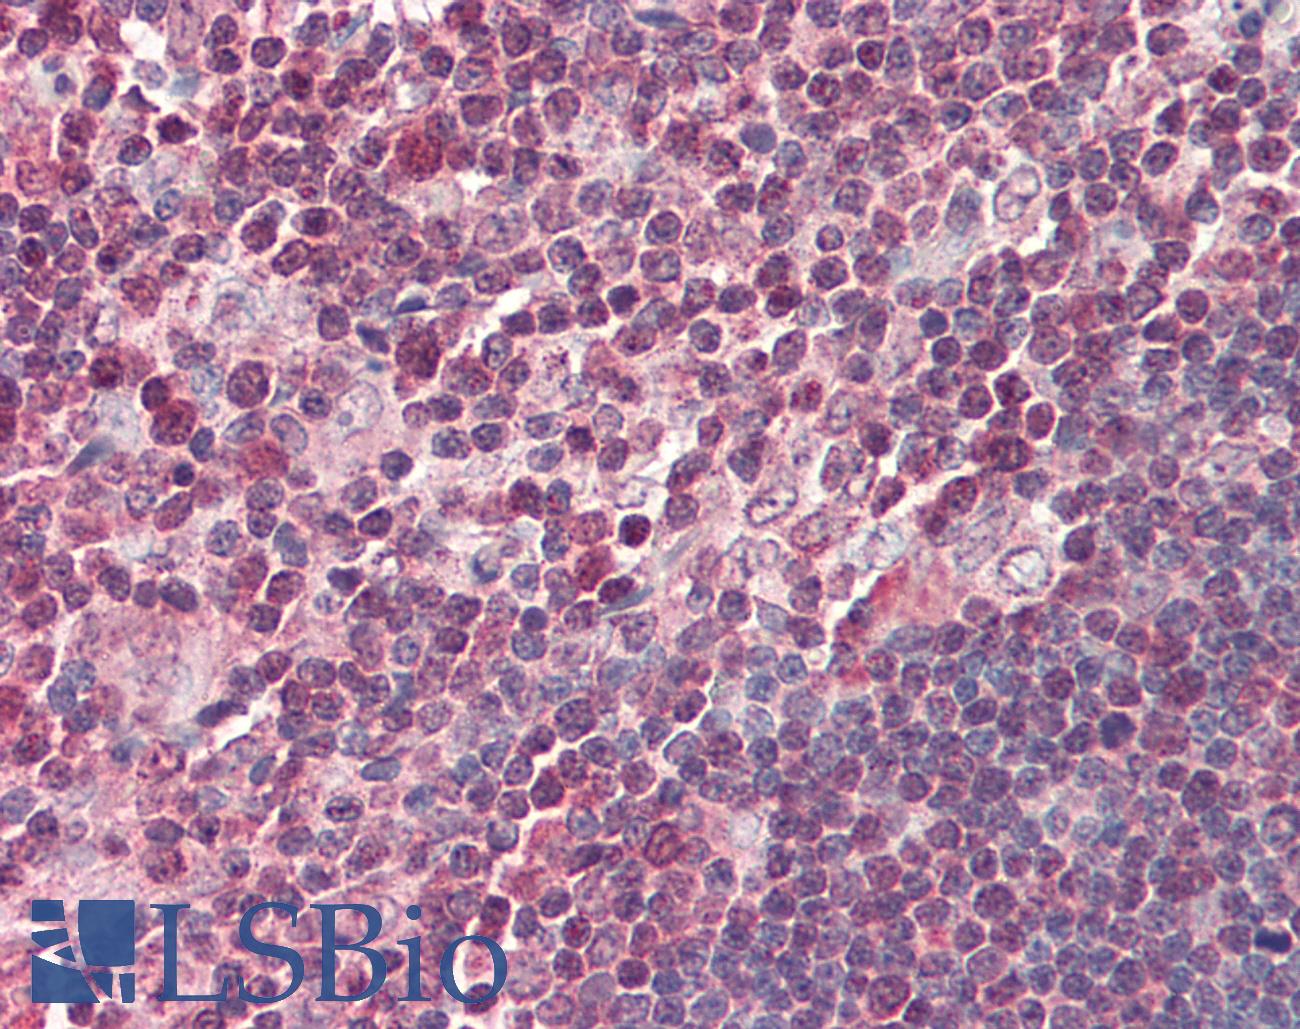 NFKB2 Antibody - Human Thymus: Formalin-Fixed, Paraffin-Embedded (FFPE)